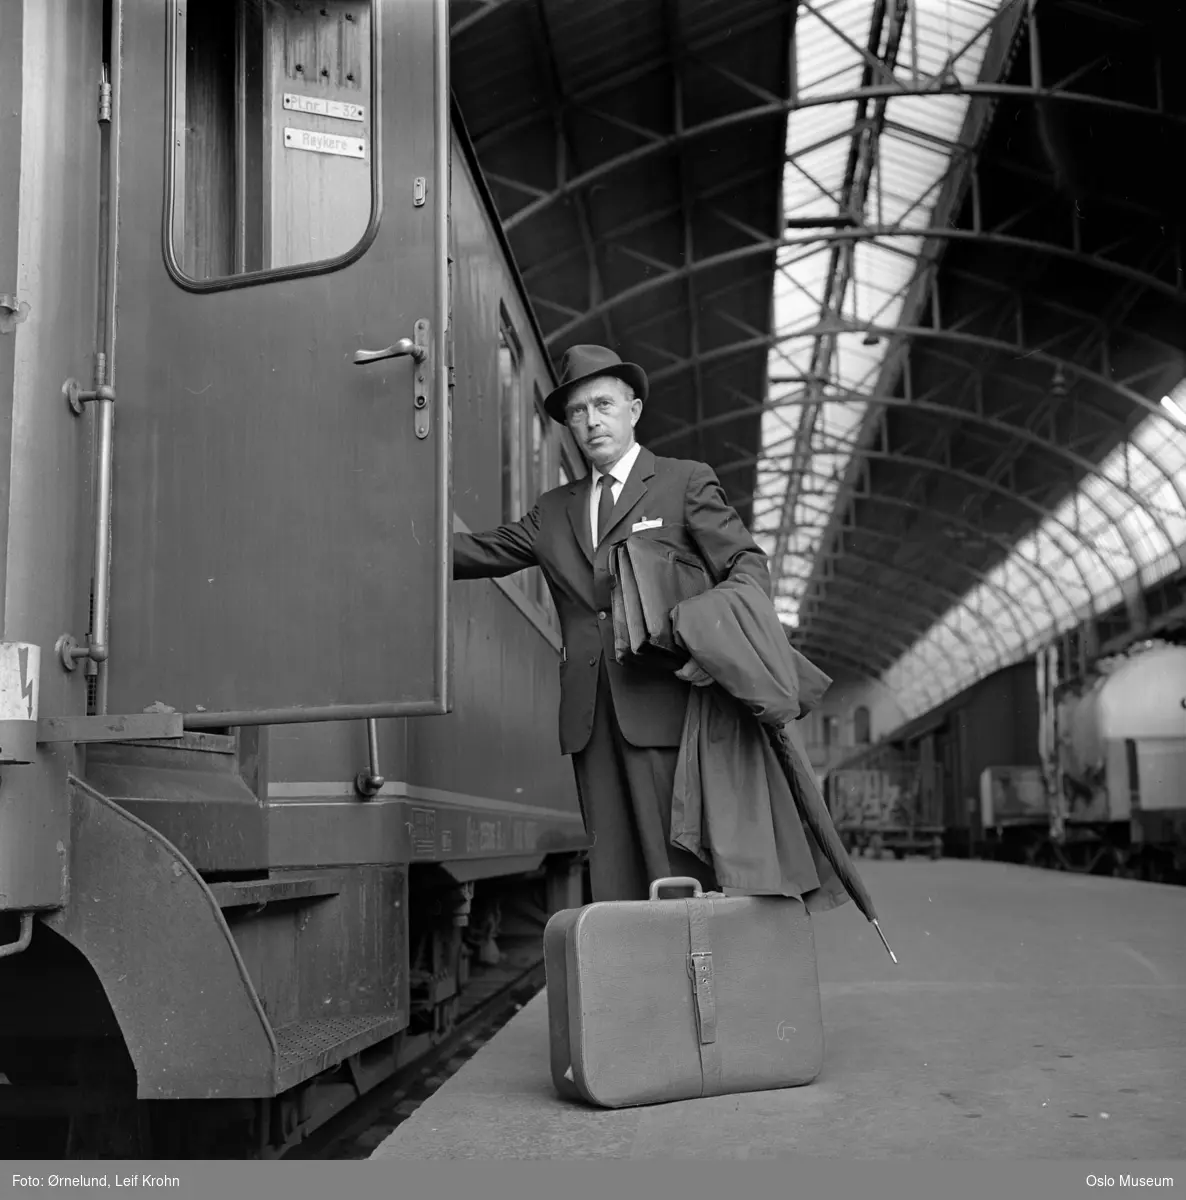 Østbanestasjonen, plattform, tog, mann, passasjer, koffert